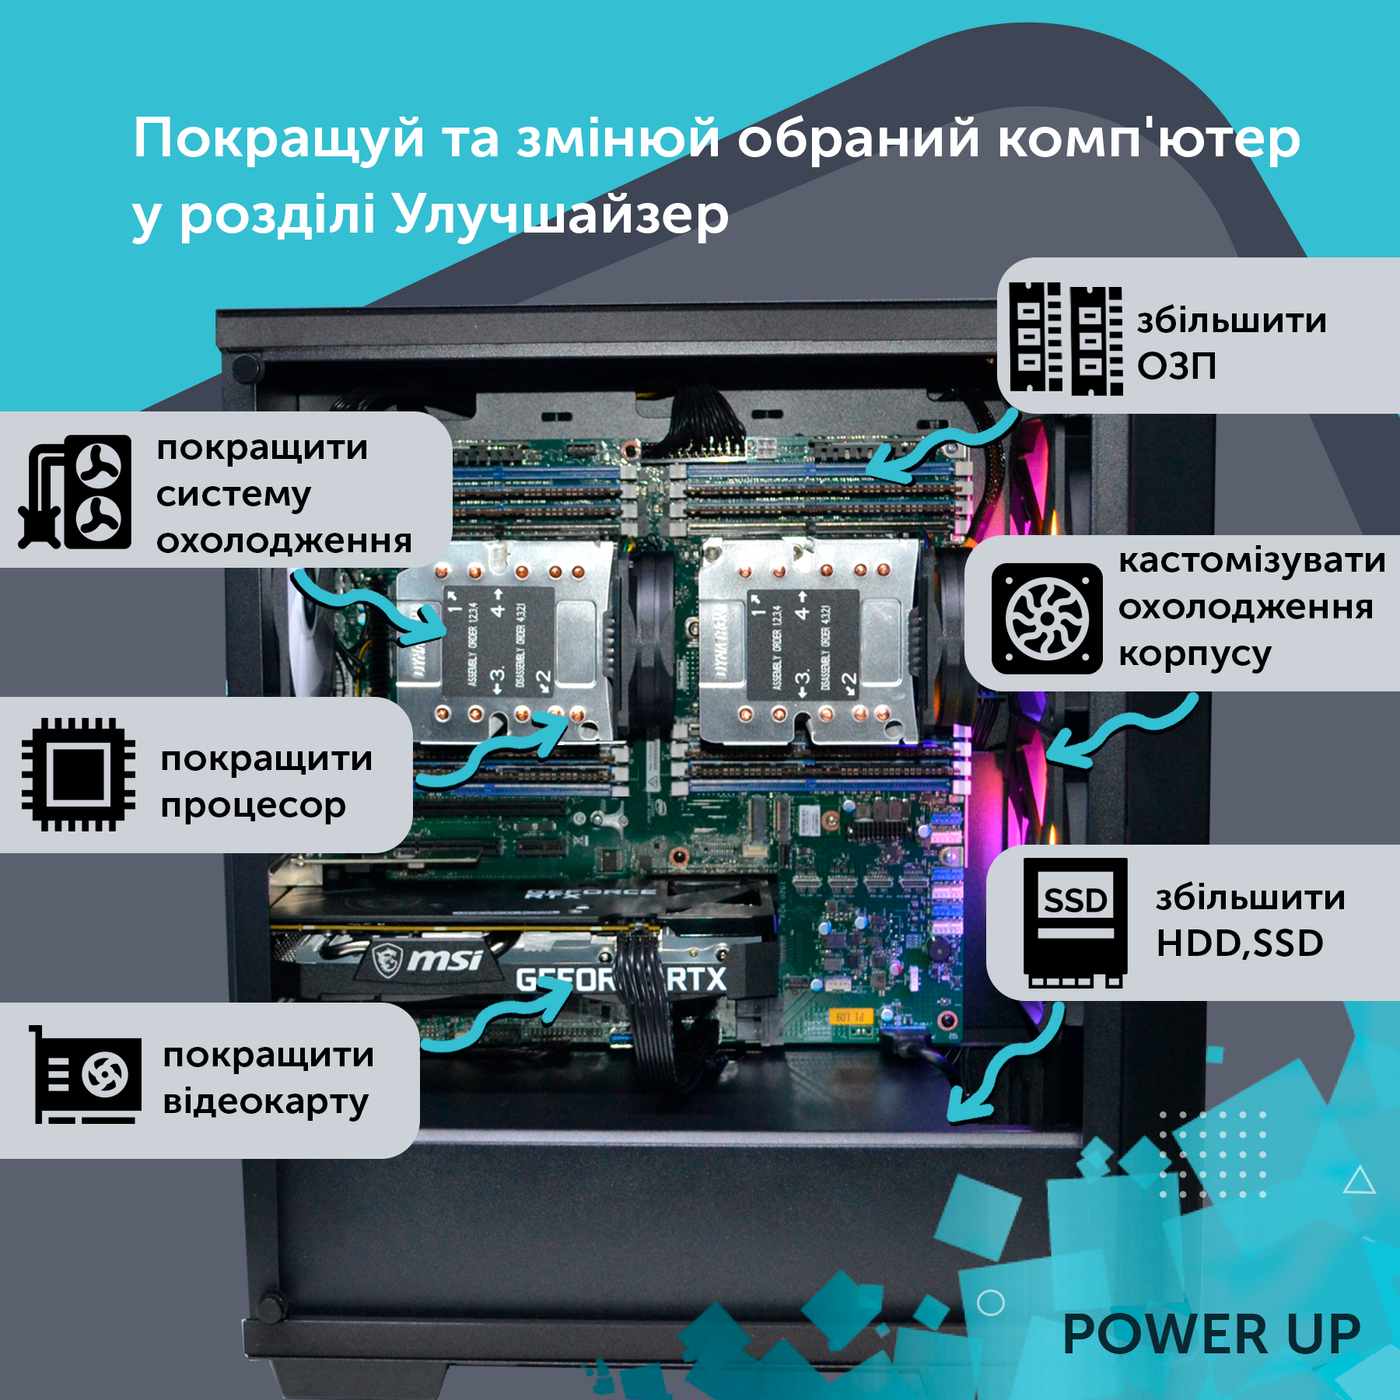 Рабочая станция PowerUp Desktop #164 Ryzen 9 5950x/32 GB/HDD 1 TB/SSD 256GB/GeForce GTX 1660Ti 6GB